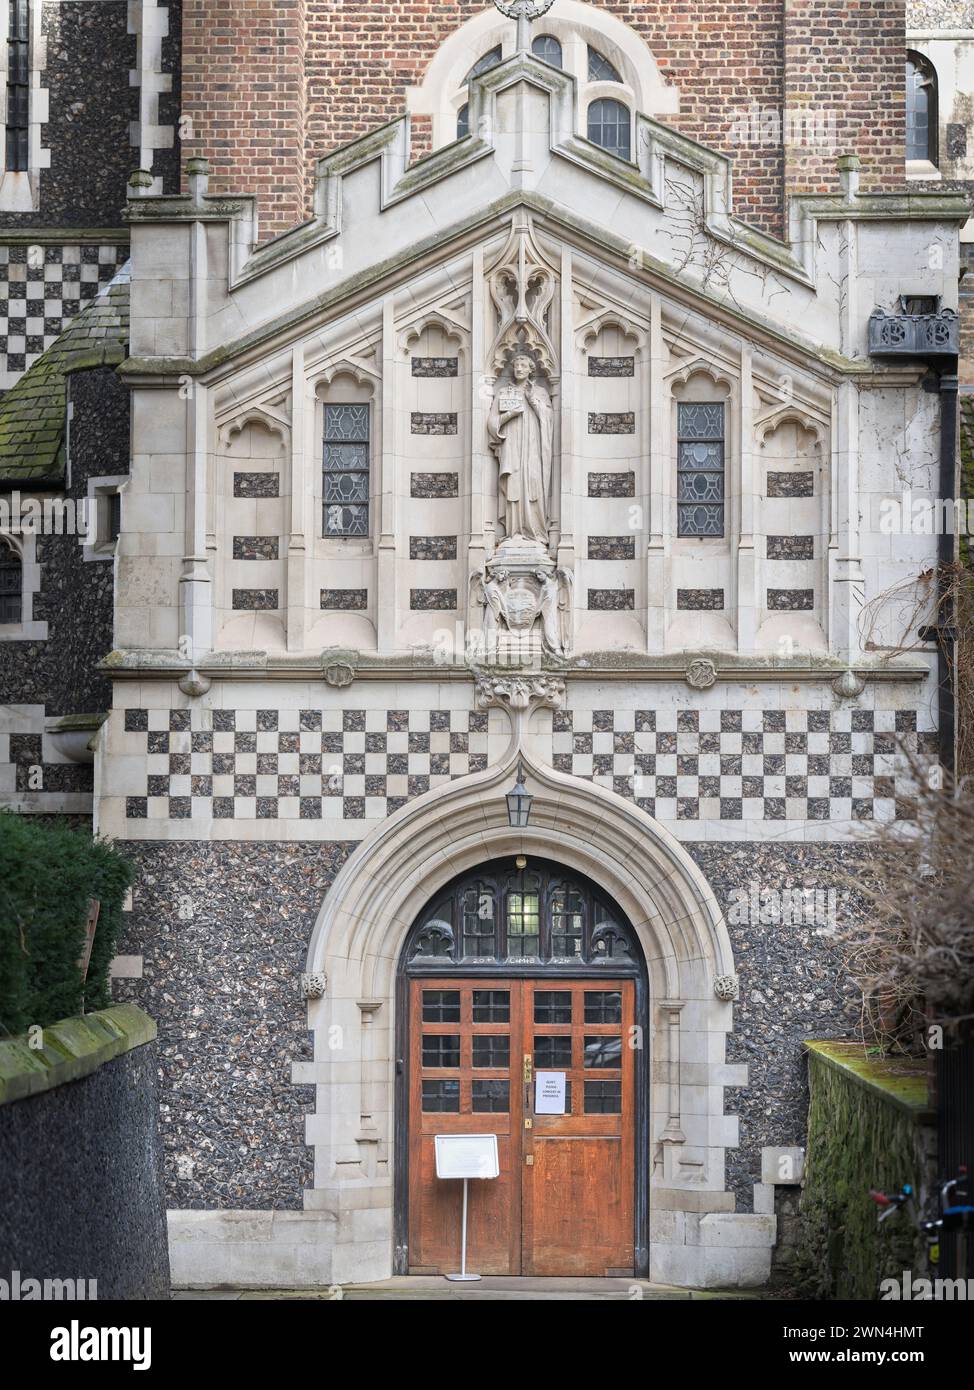 Entrance to St Bartholomew the Great (Barts the Great) church, London, England. Stock Photo